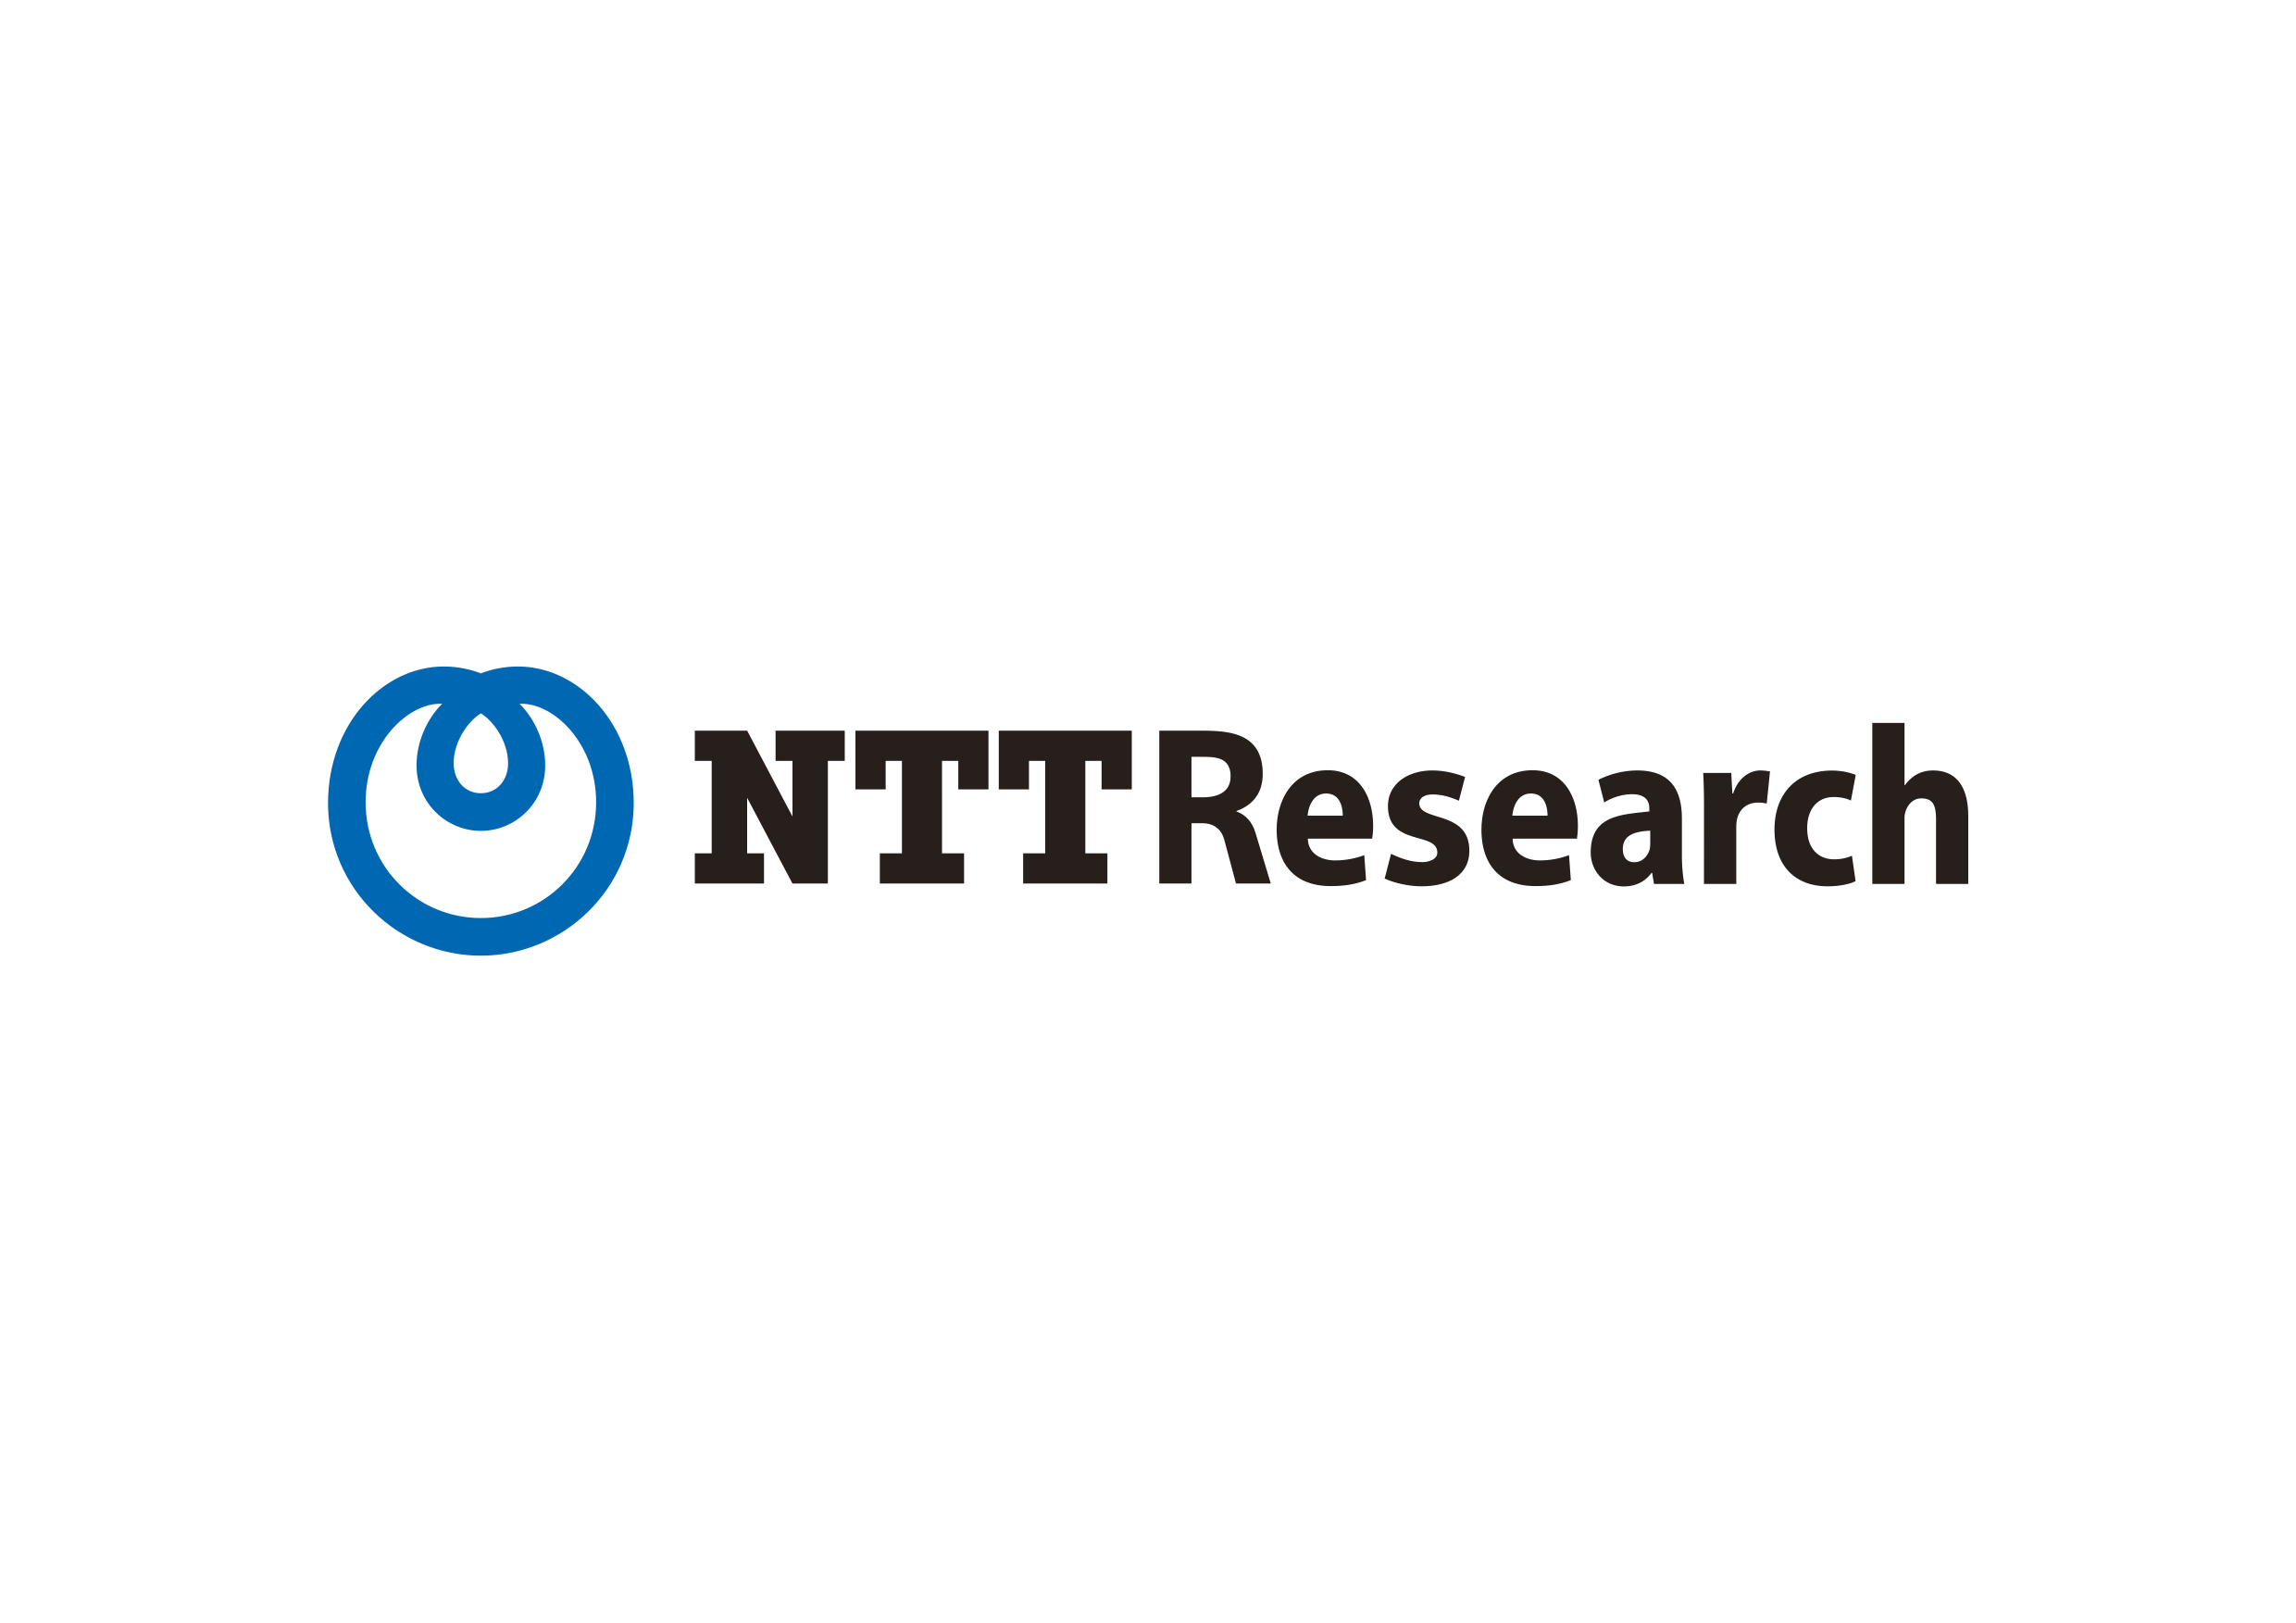 NTT Research